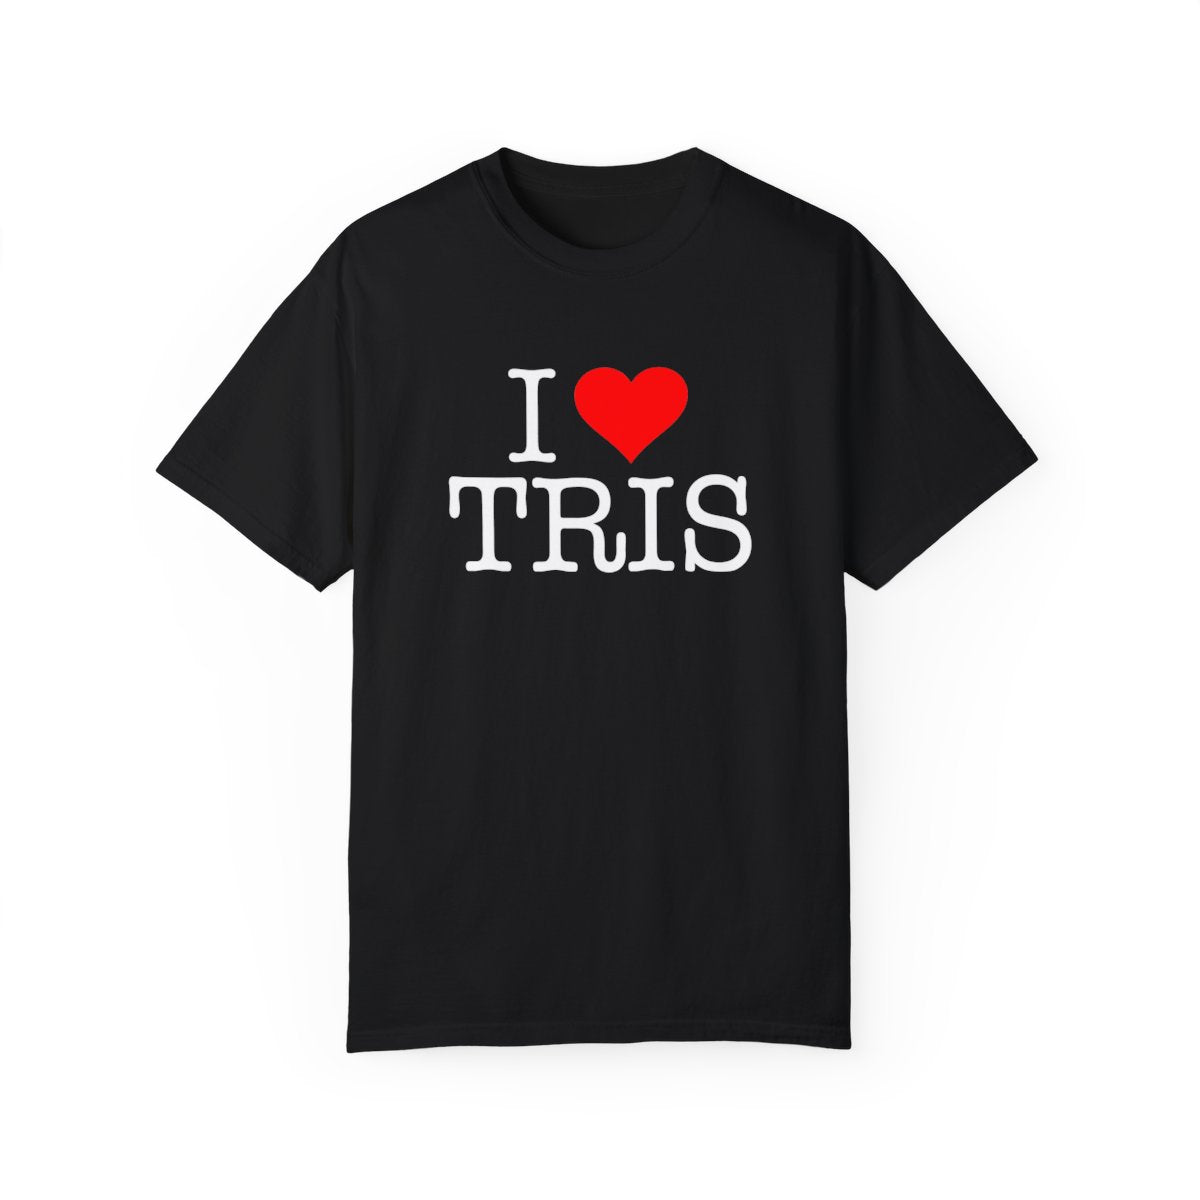 "I LOVE TRIS" T-Shirt - Black